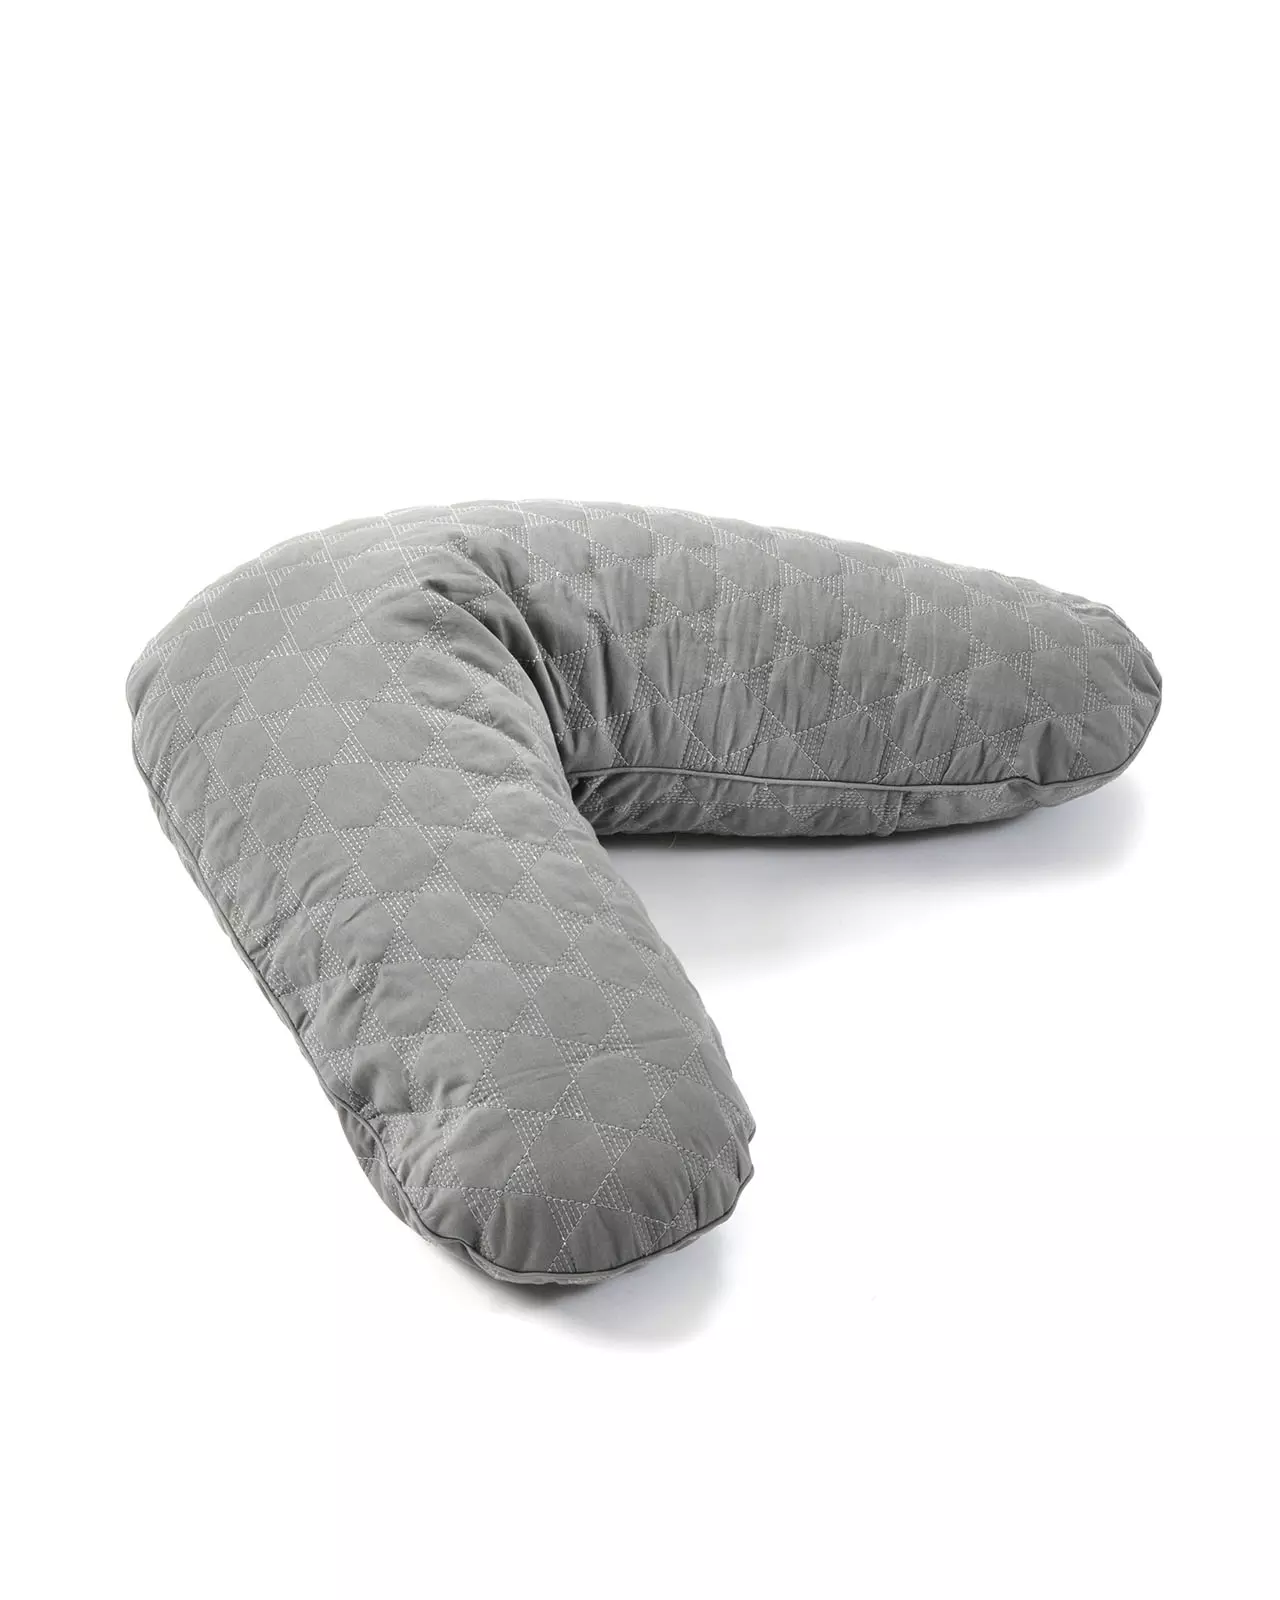 Smallstuff Quilted Nursing Pillow Grey